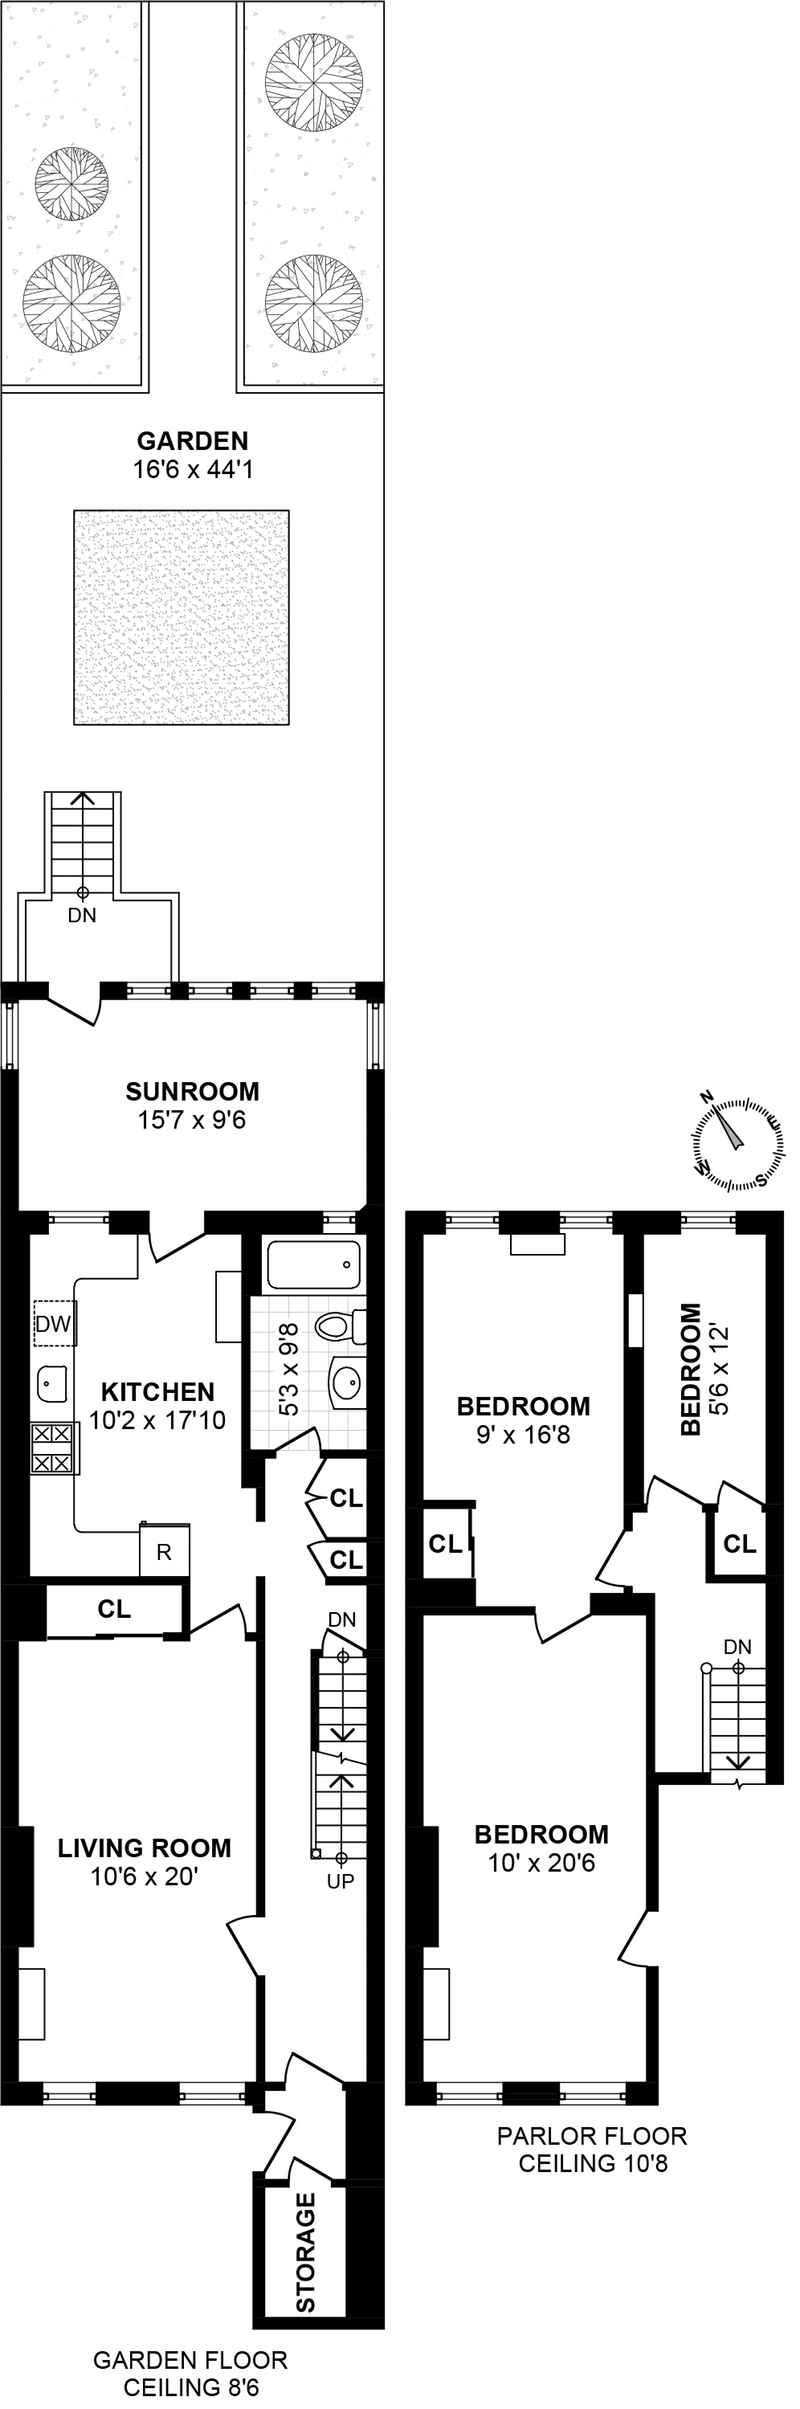 Floorplan for 363 Sixth Street, GARDEN